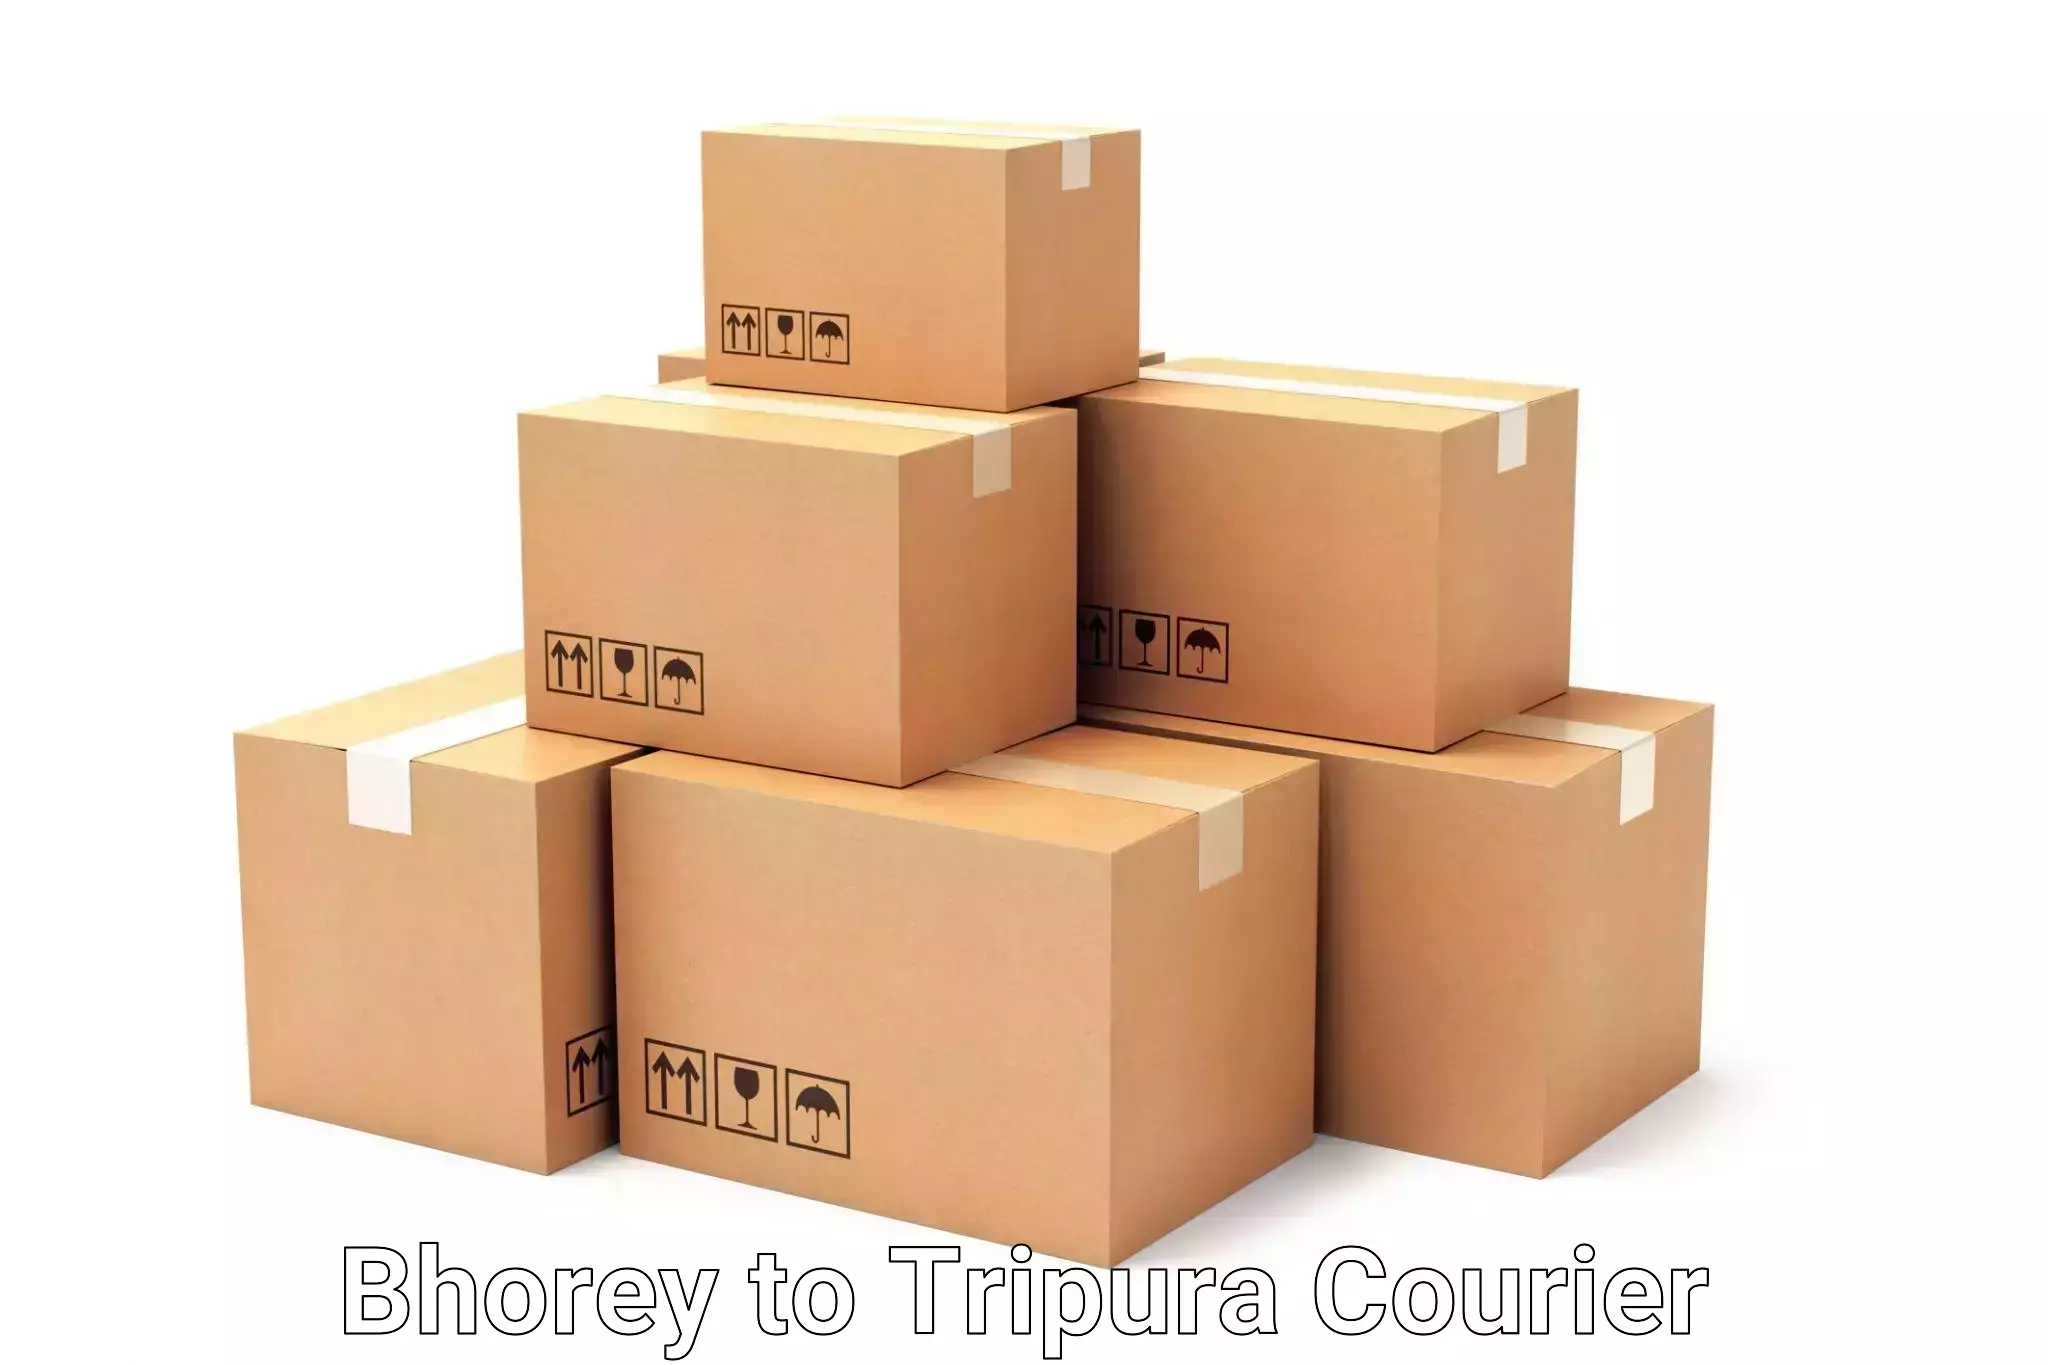 Urgent luggage shipment in Bhorey to Manughat